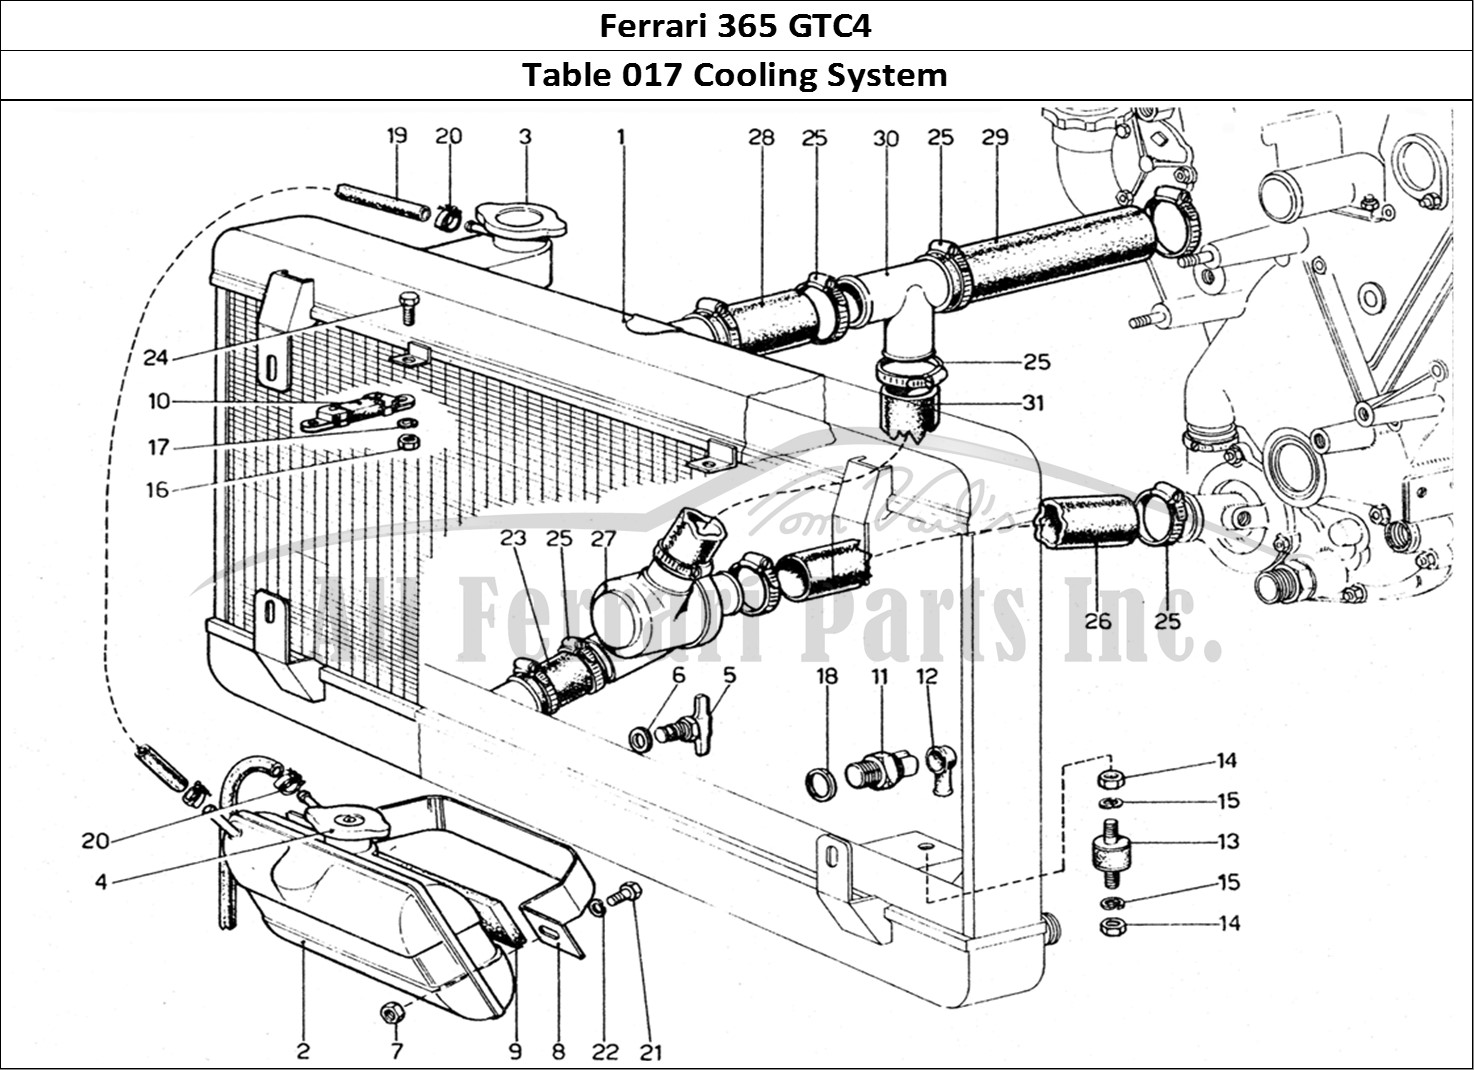 Ferrari Parts Ferrari 365 GTC4 (Mechanical) Page 017 Water circuit